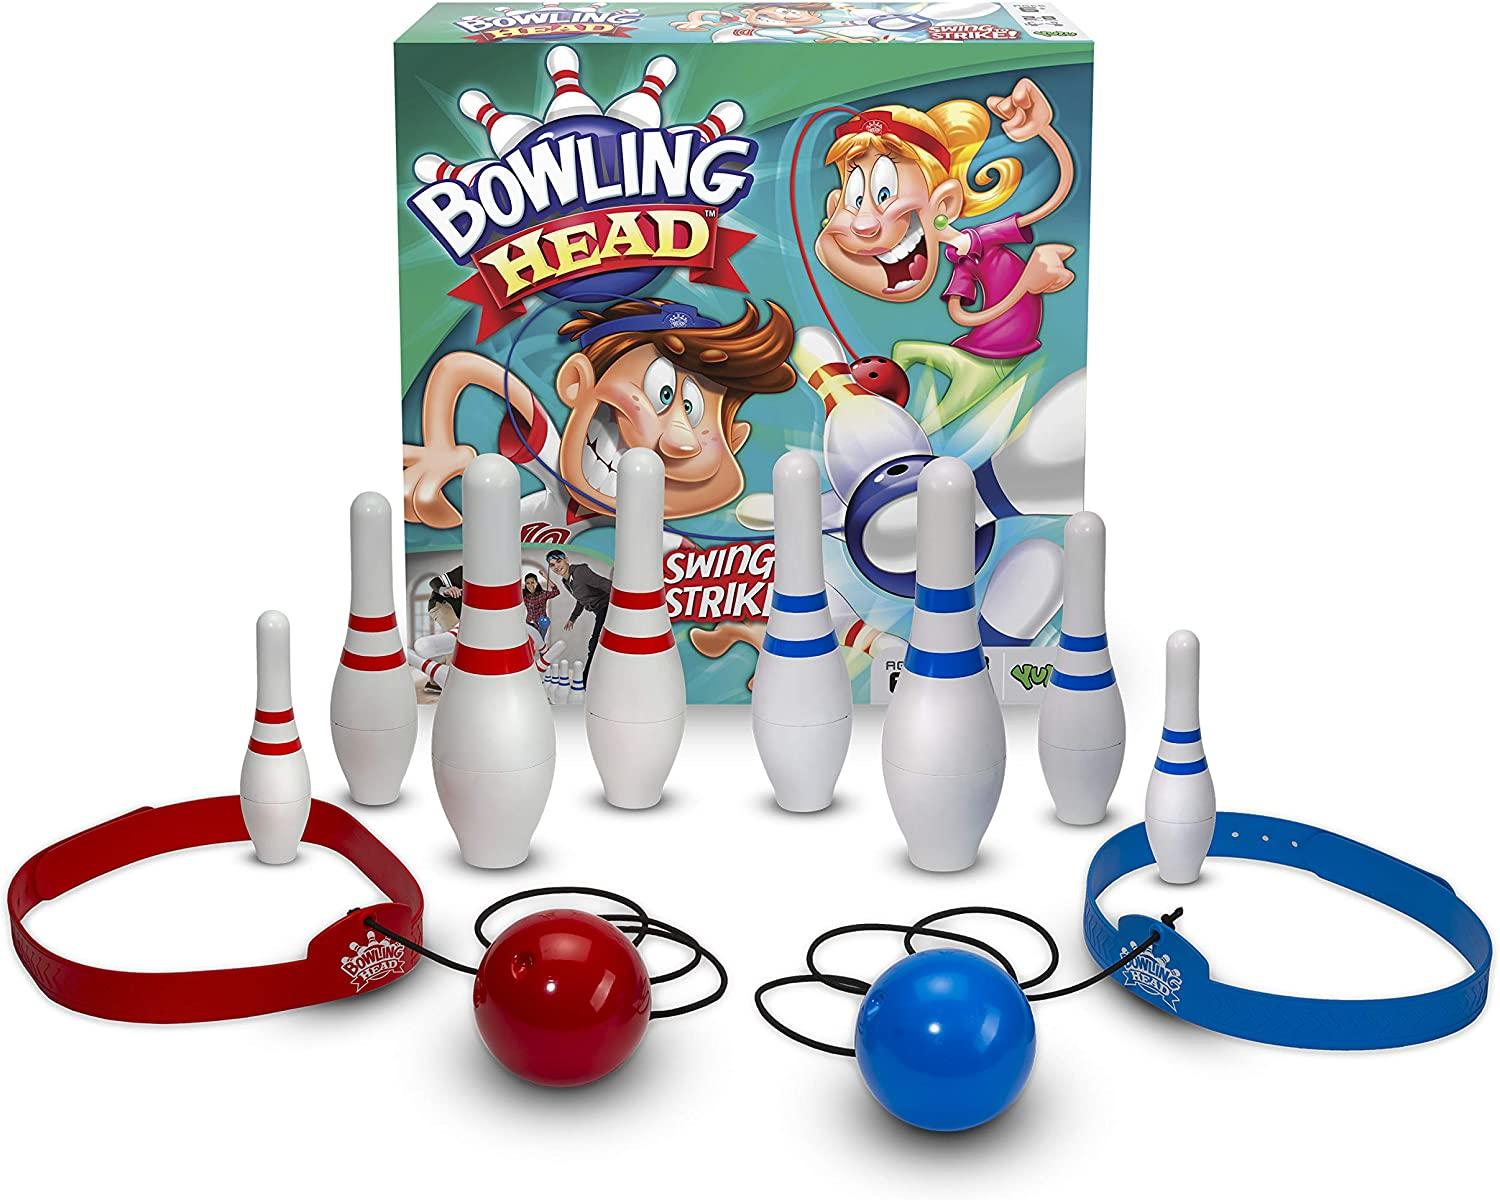 Yulu Bowling Head Toymaster Ballina